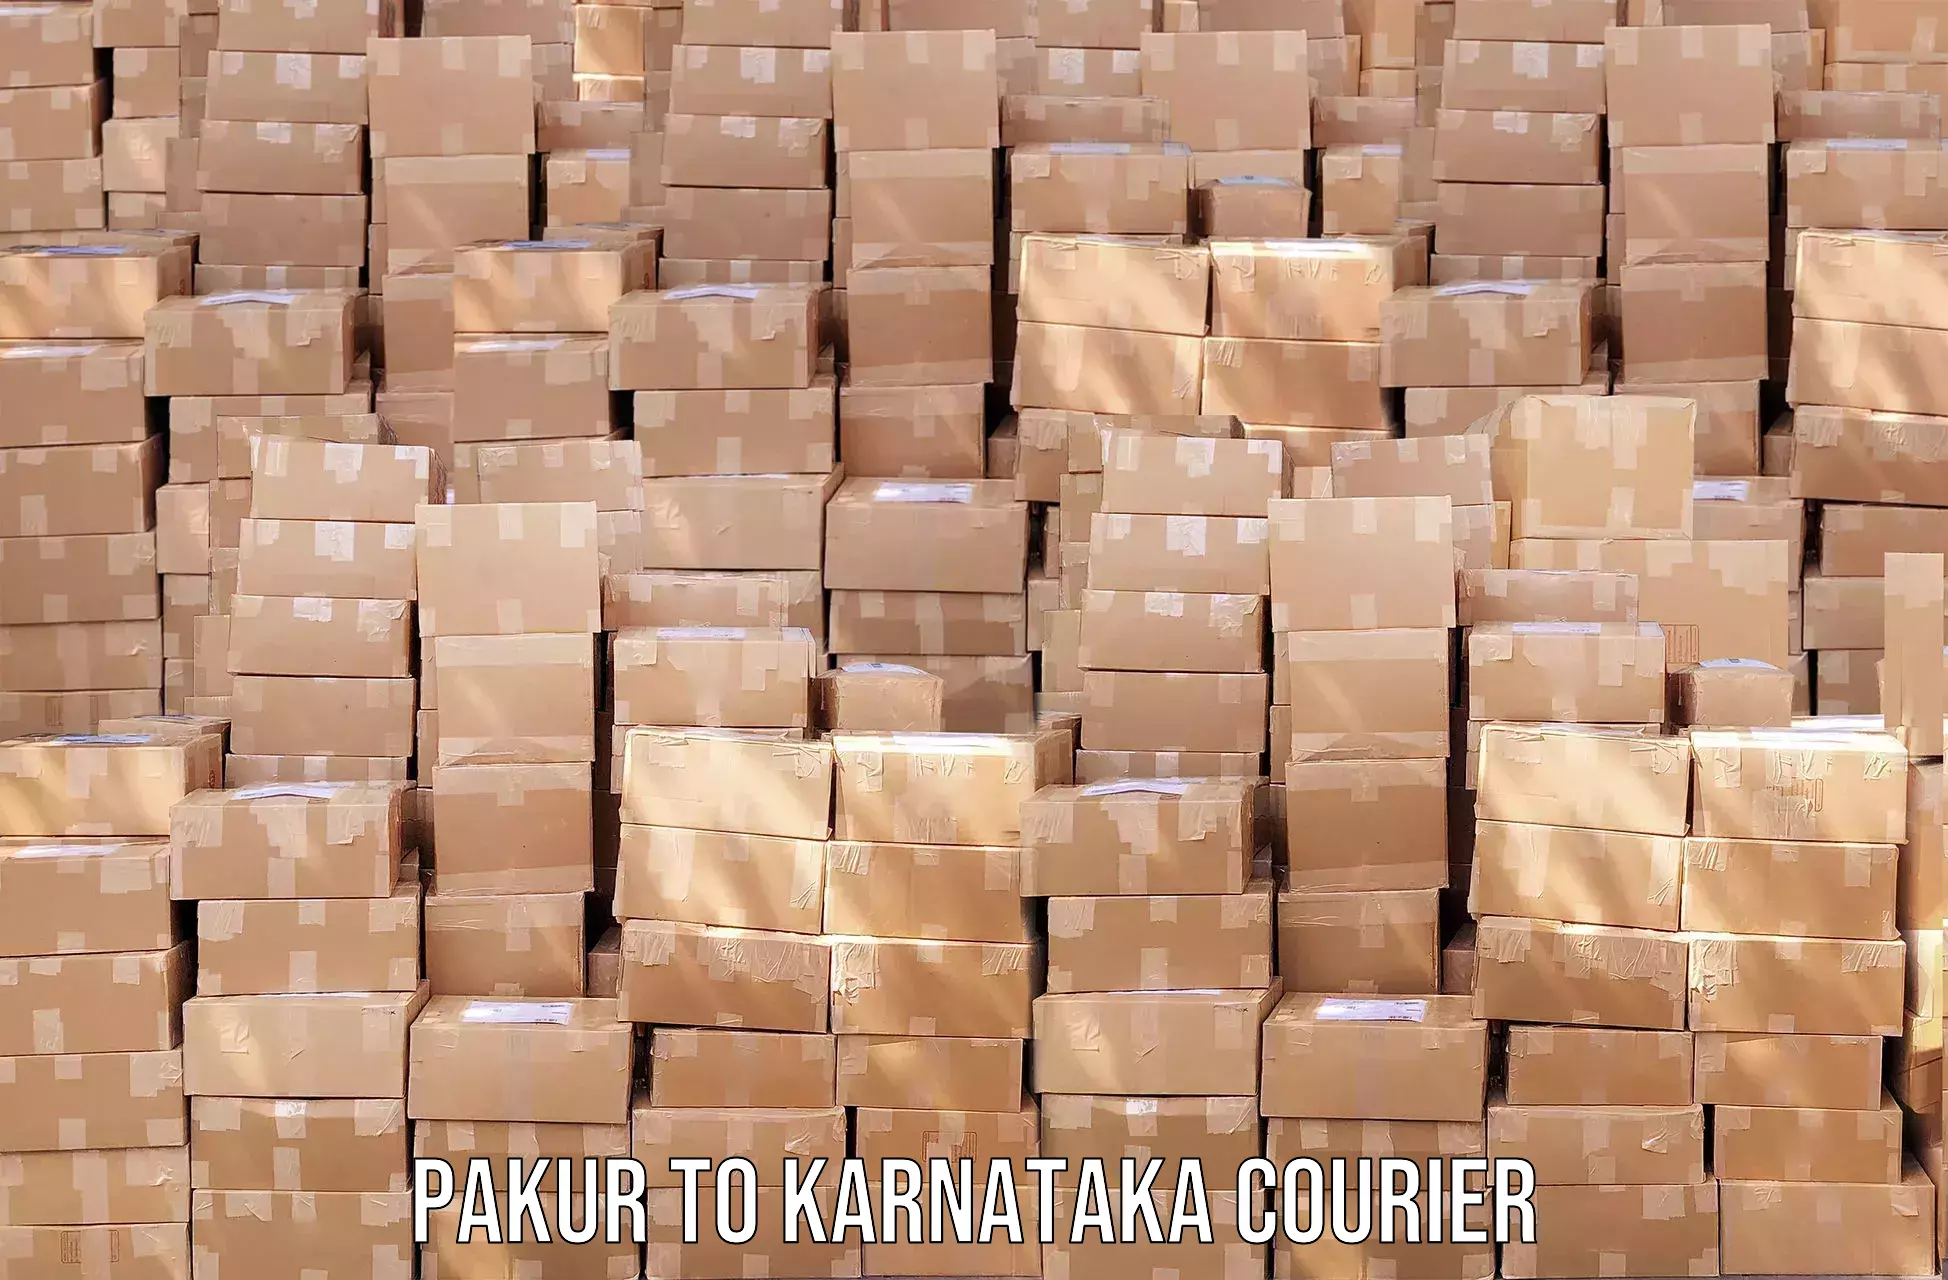 Reliable logistics providers Pakur to Karnataka